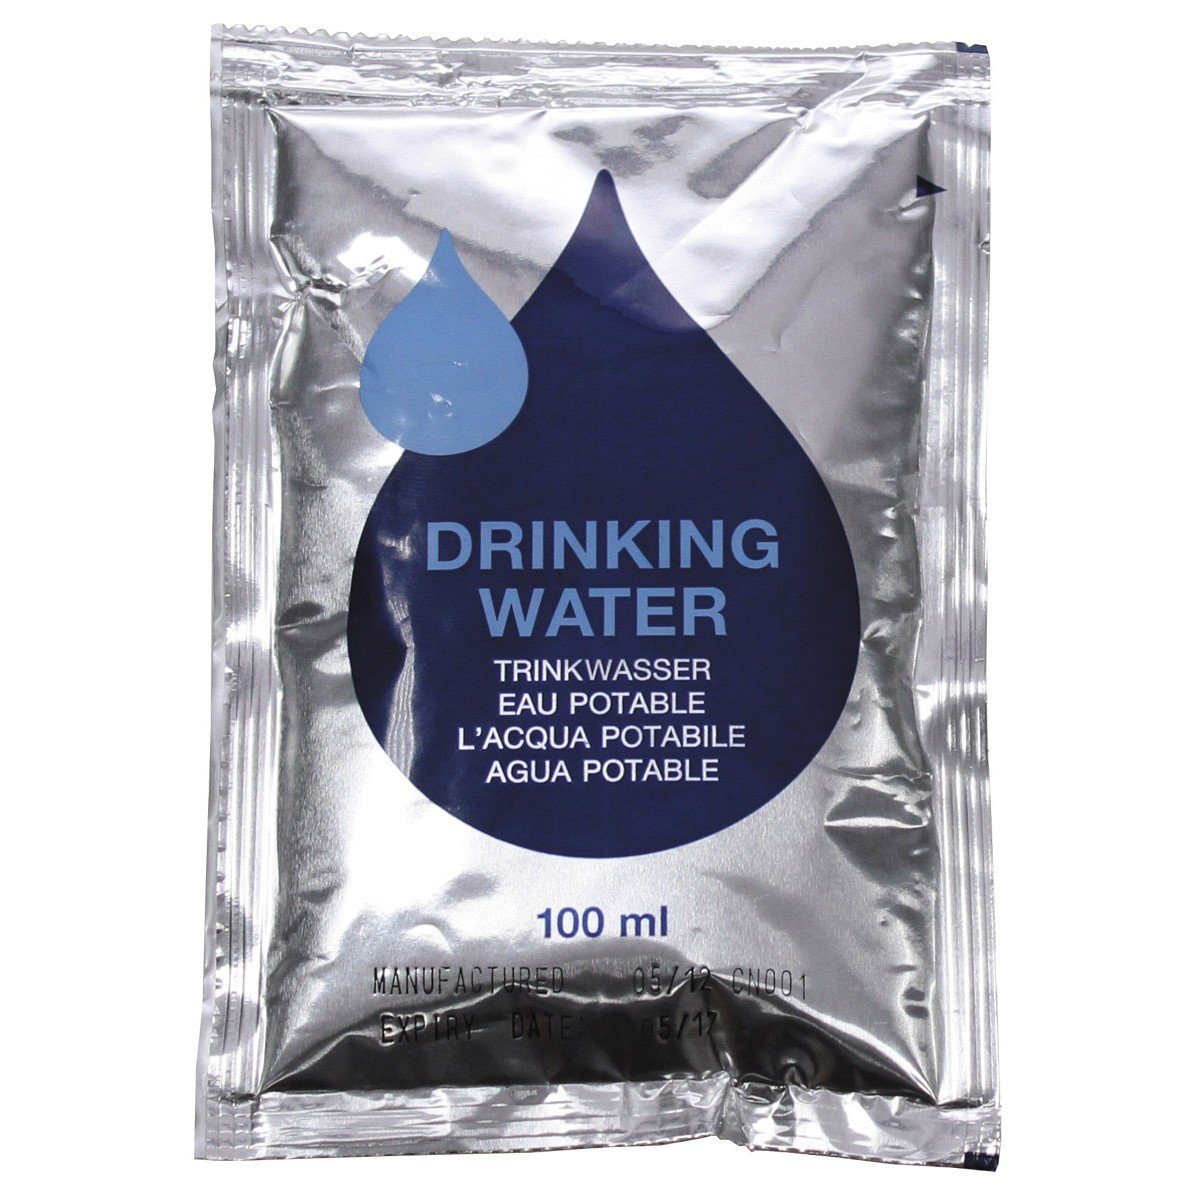 Pitná voda nouzová 100ml Emergency Drinking Water Katadyn®